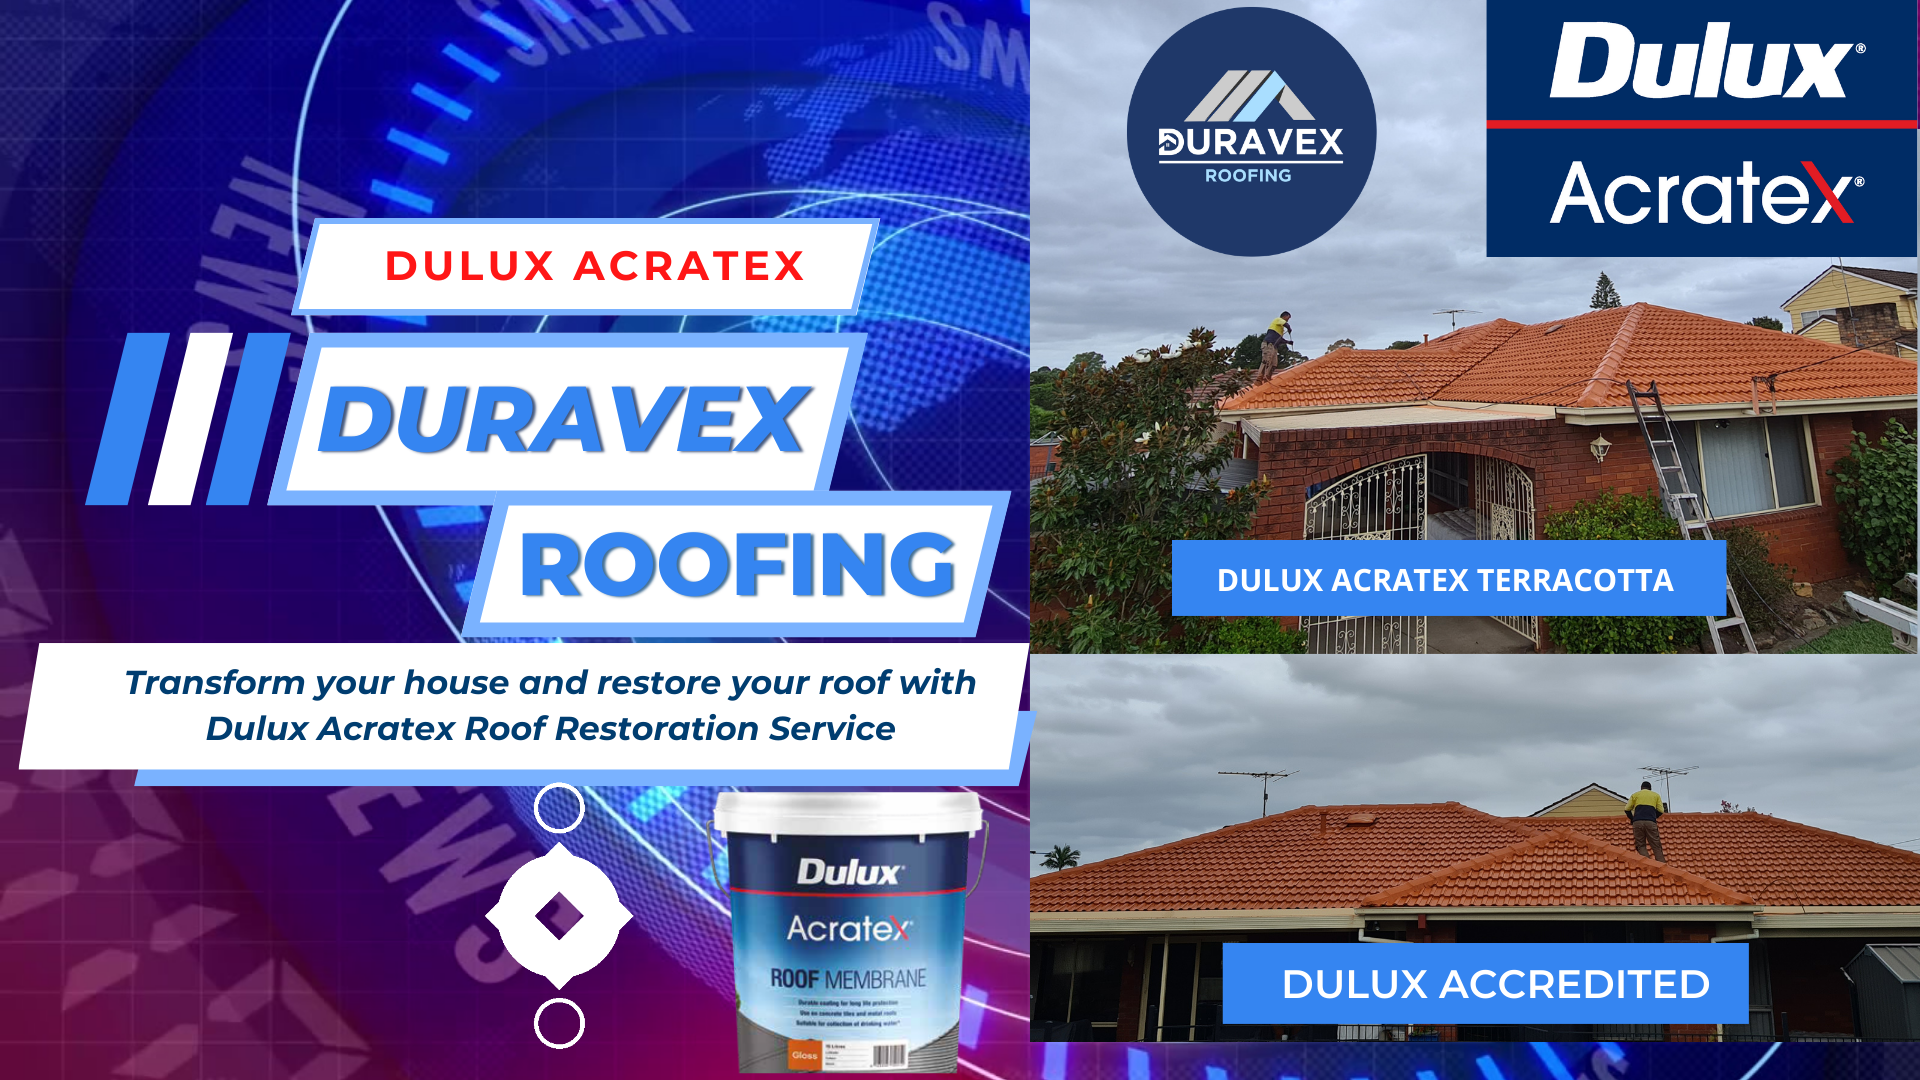 Dulux Acratex Terracotta Roof Restoration Service in Sydney